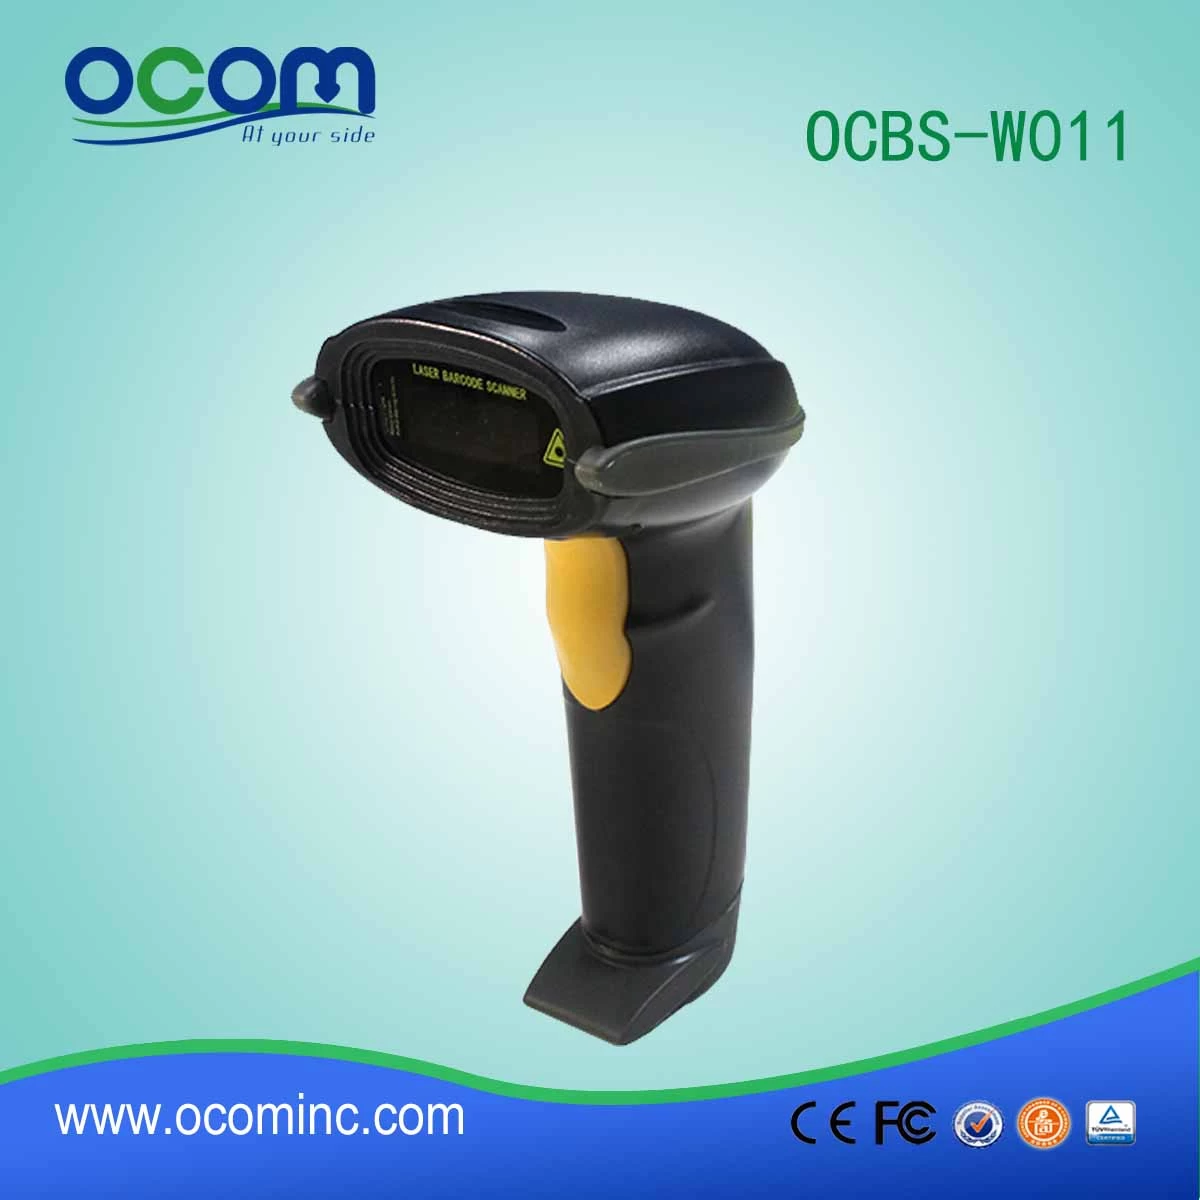 High scan rate usb RF433MHz Wireless Laser Barcode Scanner(OCBS-W011)